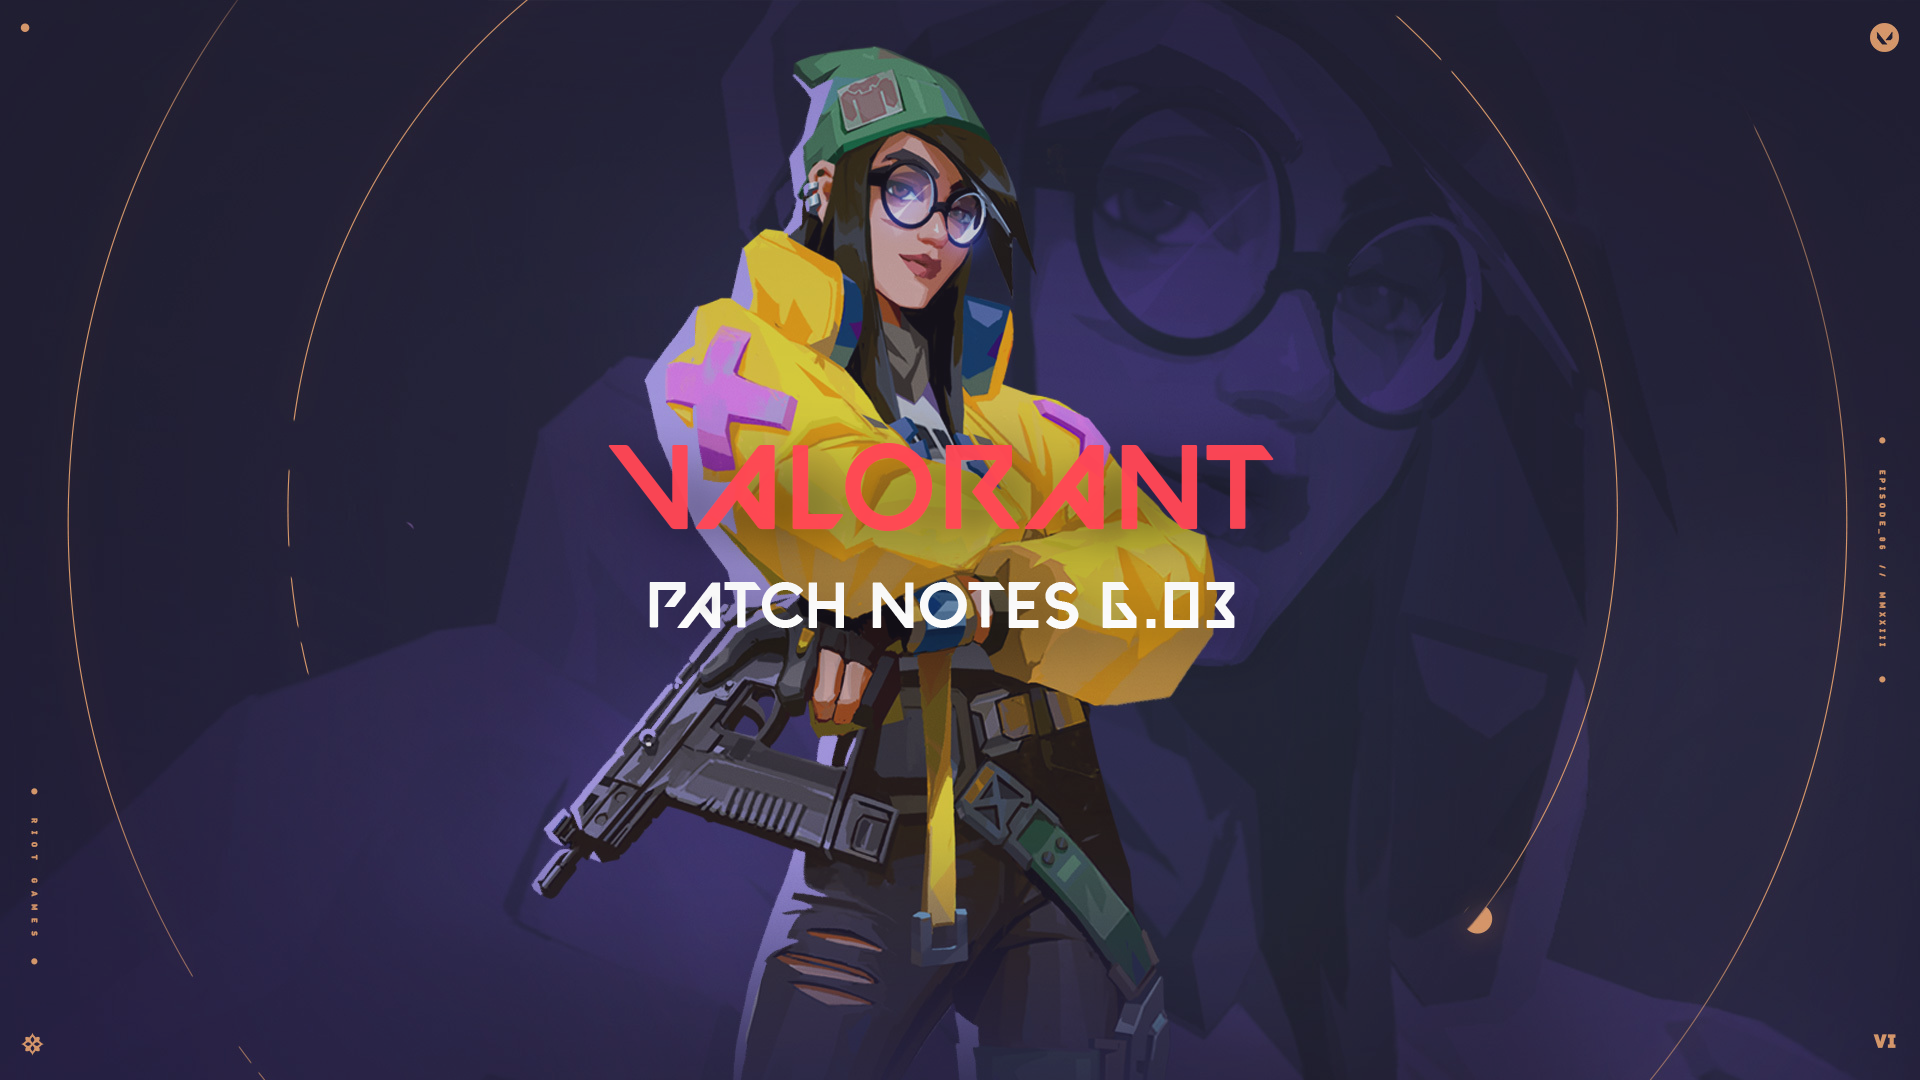 Valorant 6.03 patch notes revealed: Killjoy & Raze nerfs, and more